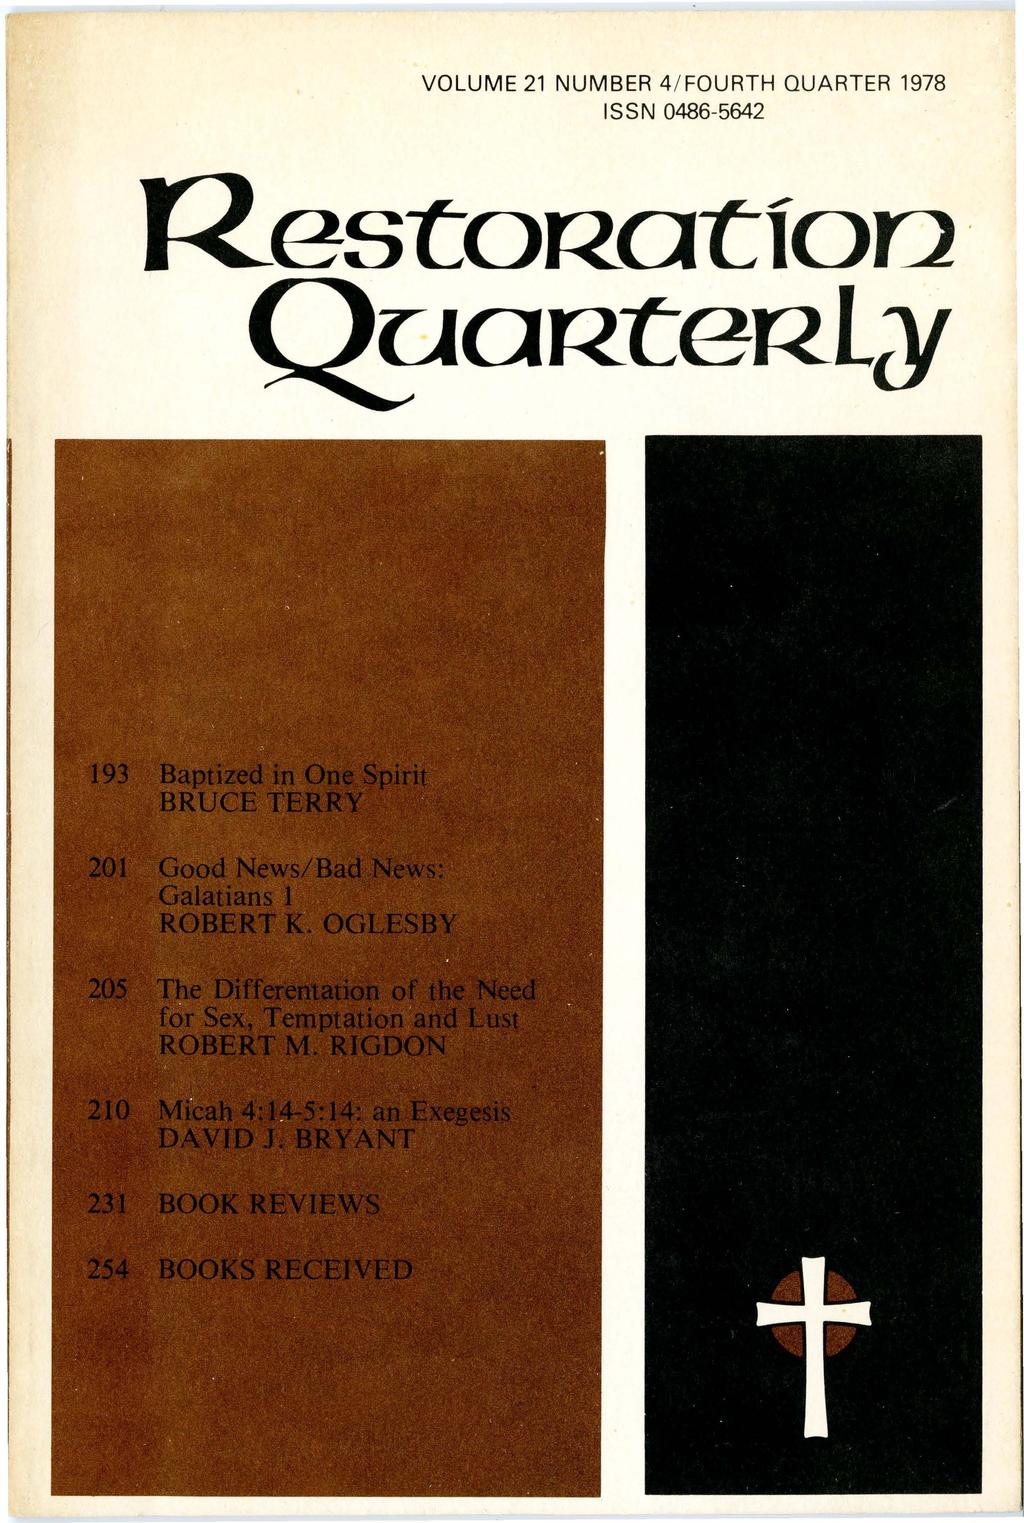 VOLUME 21 NUMBER 4/ FOURTH QUARTER 1978